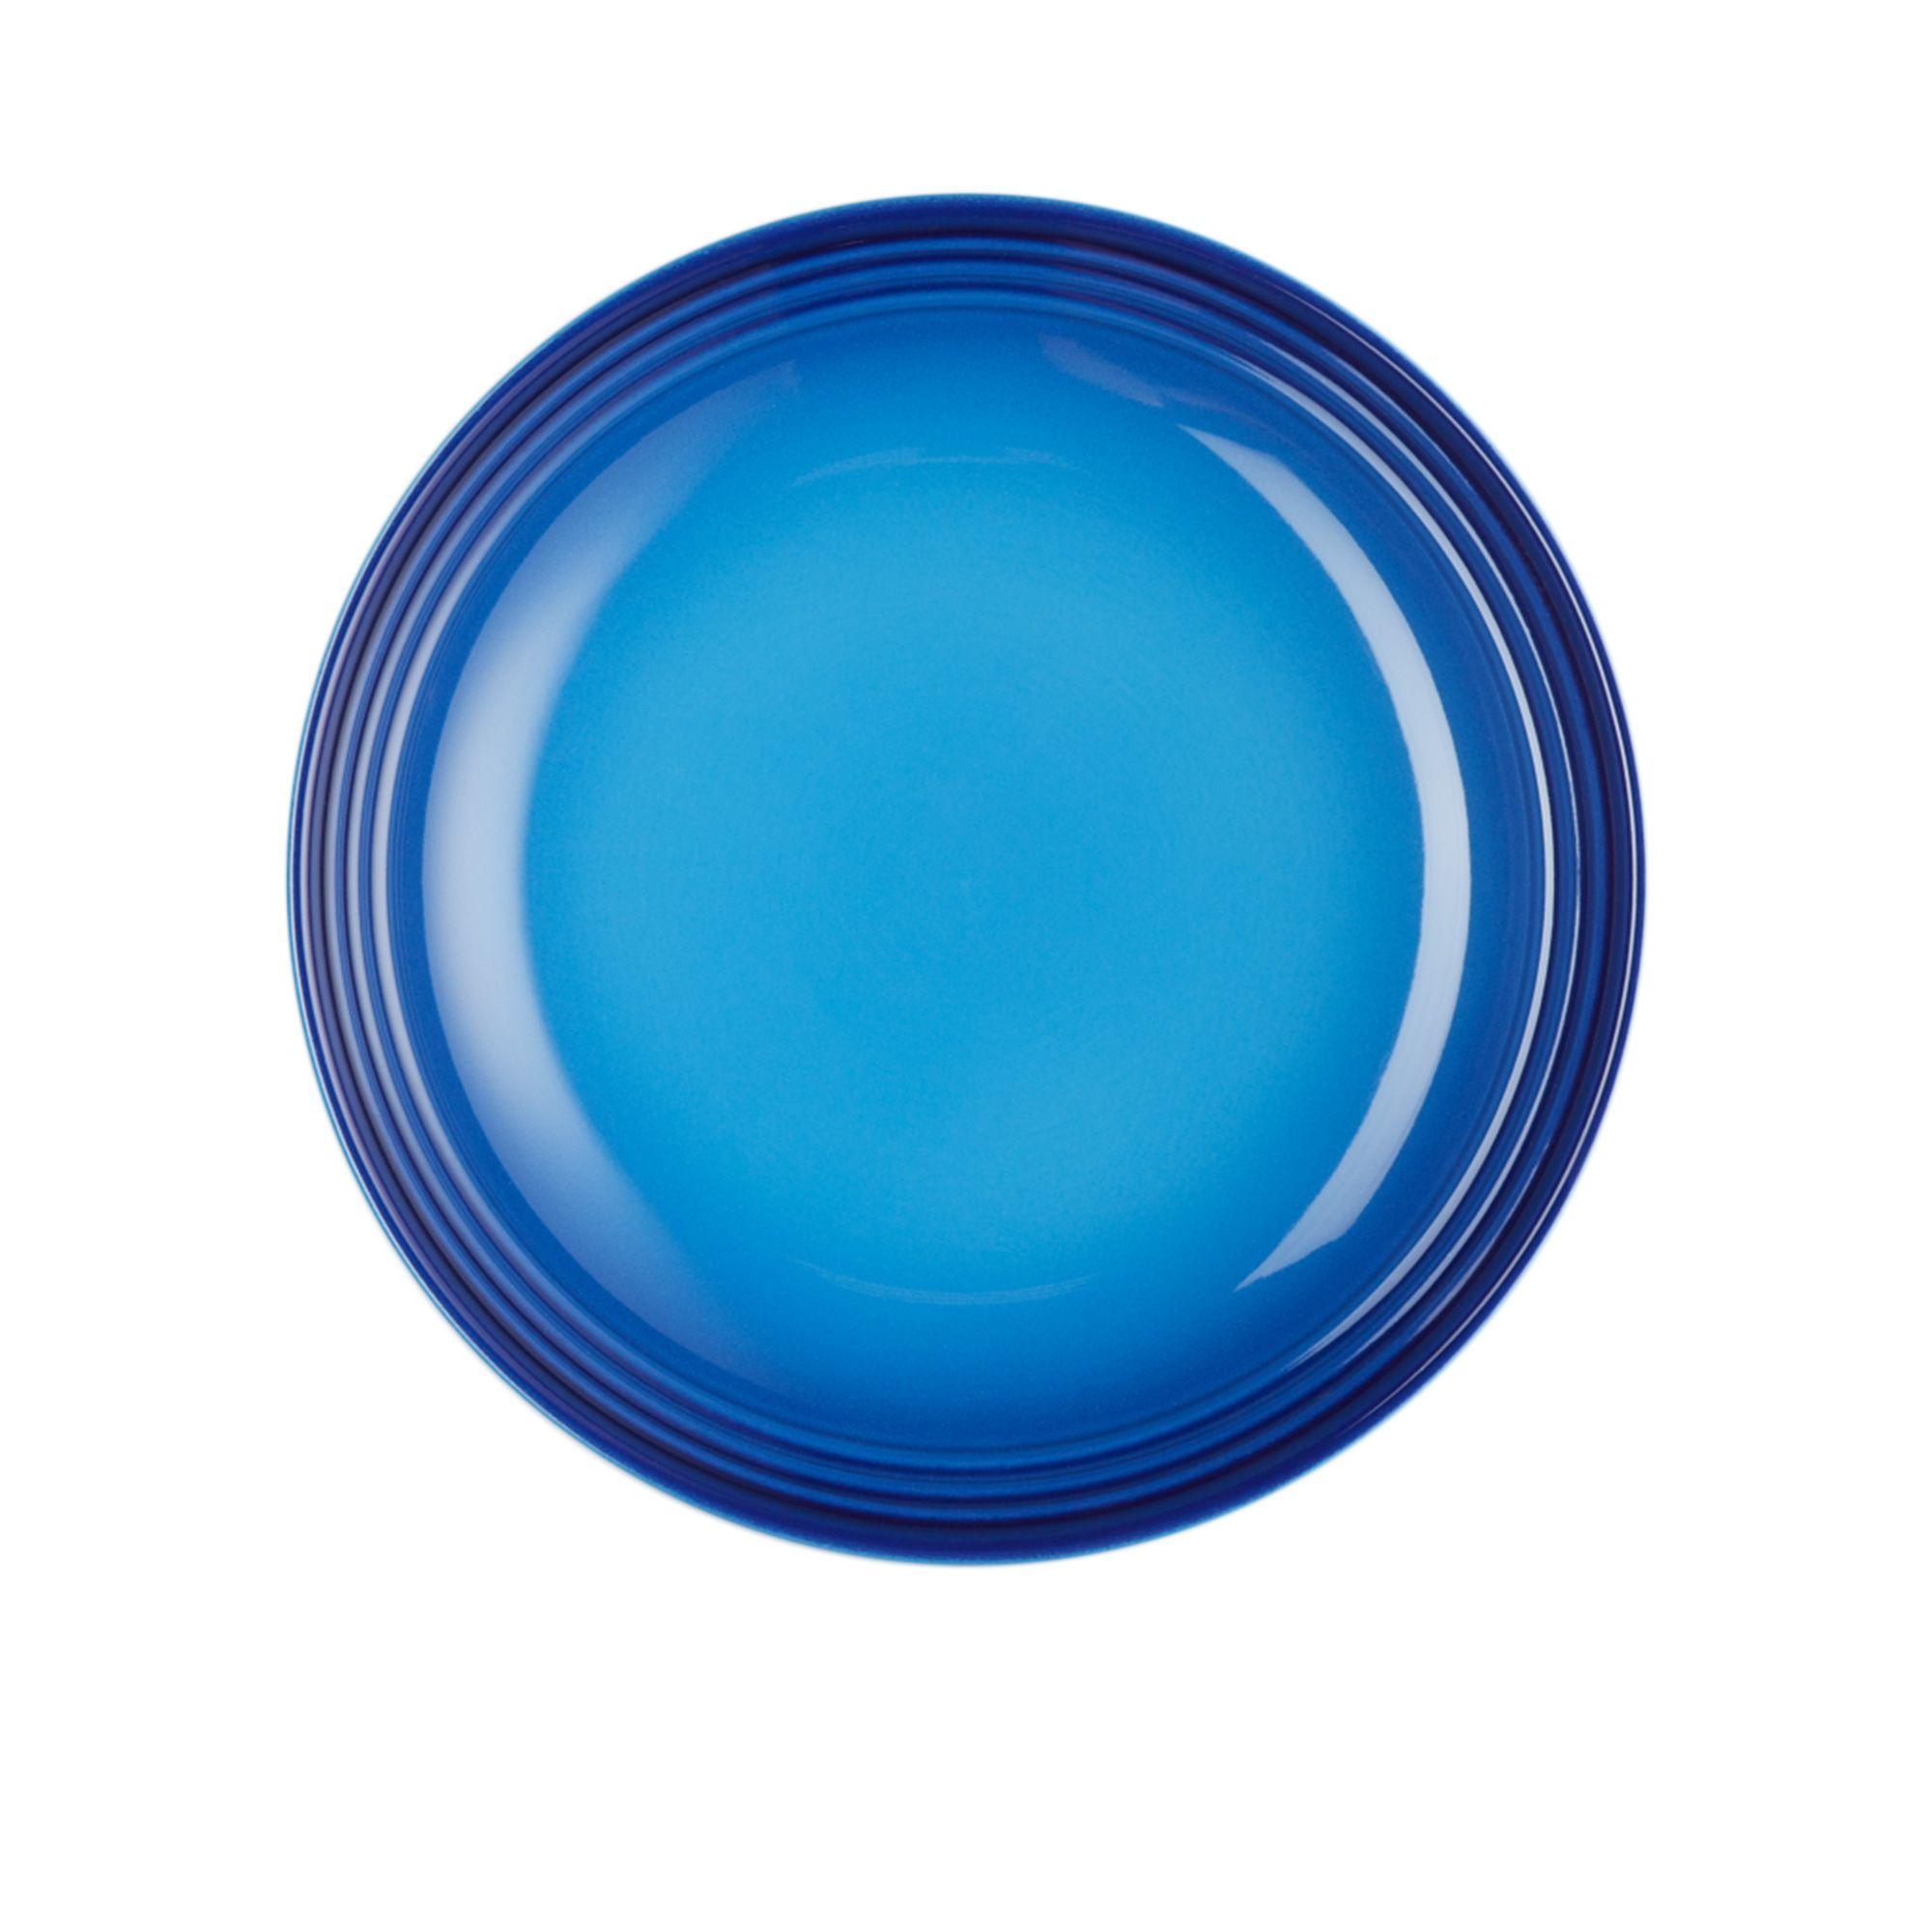 Le Creuset Stoneware Pasta Bowl Set of 4 Azure Blue Image 4